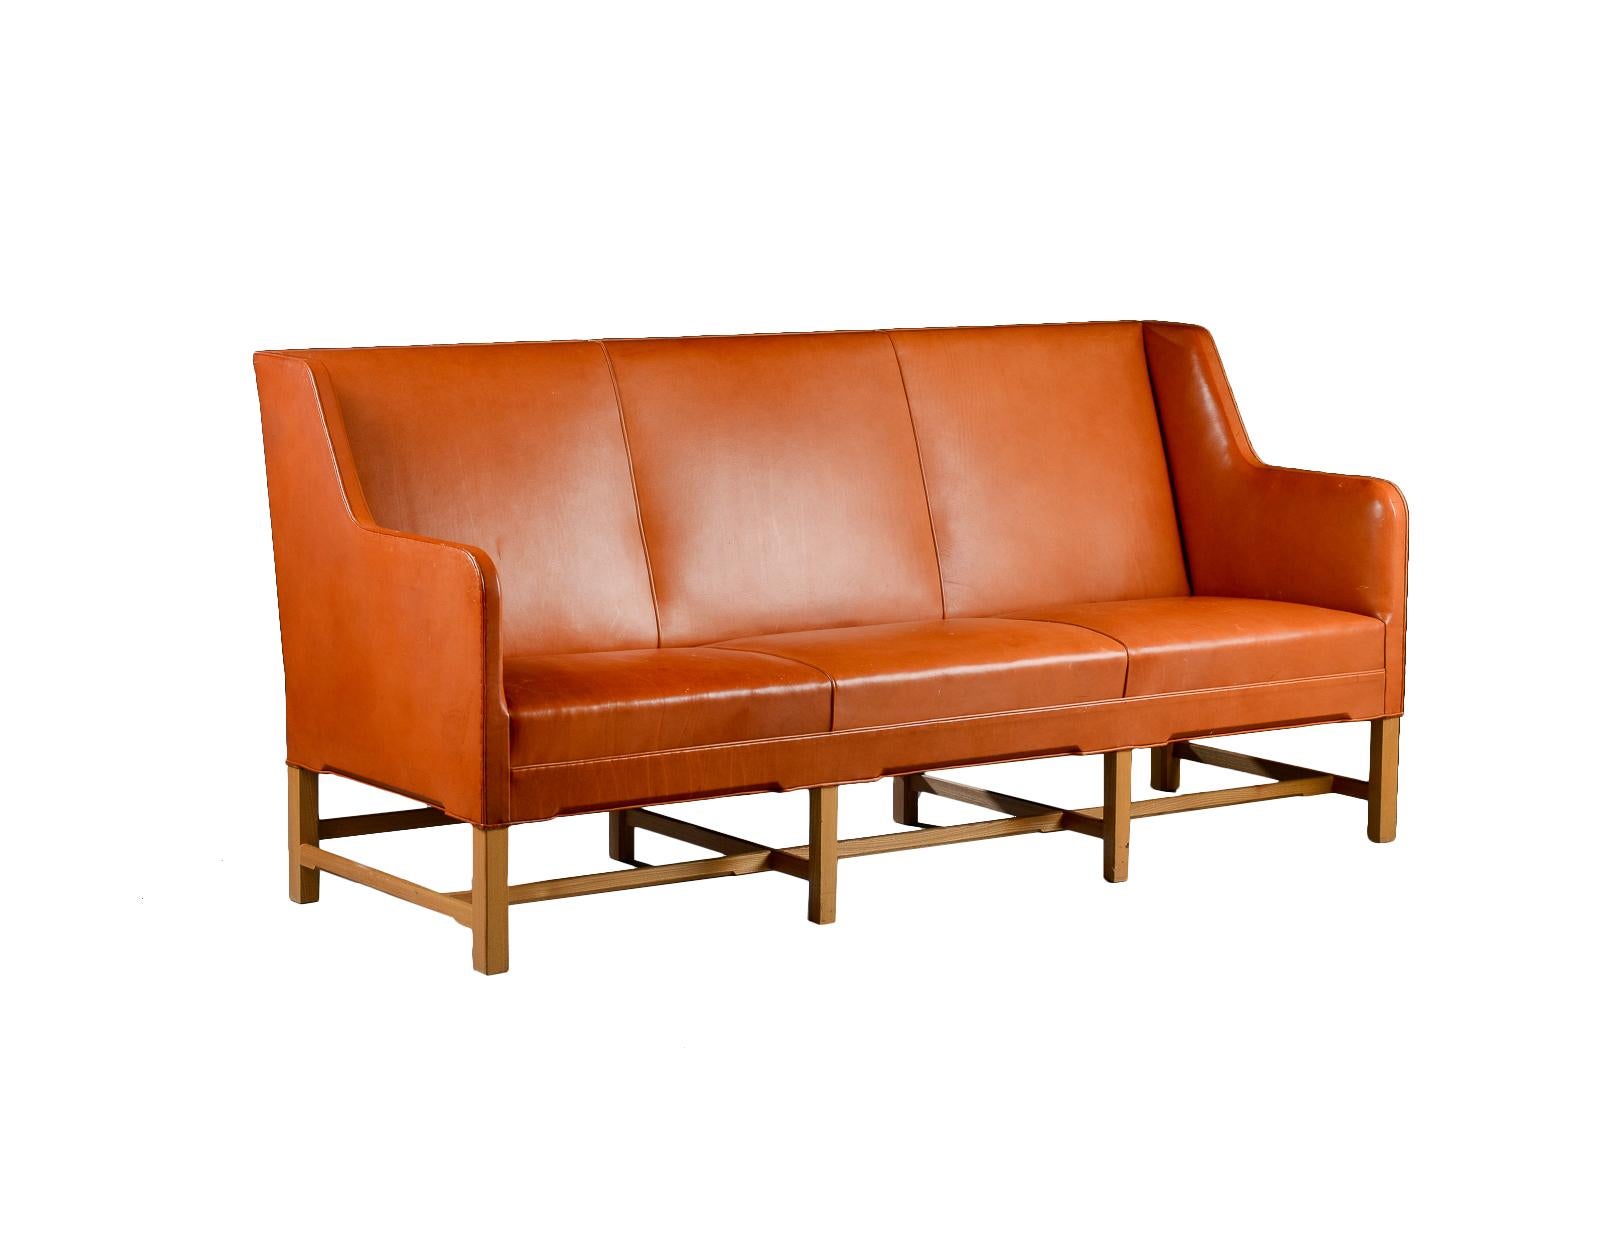 Kaare Klint Three-Seat Sofa in Original Cognac Leather Rud, Rasmussen Danish In Good Condition For Sale In Amsterdam, NL